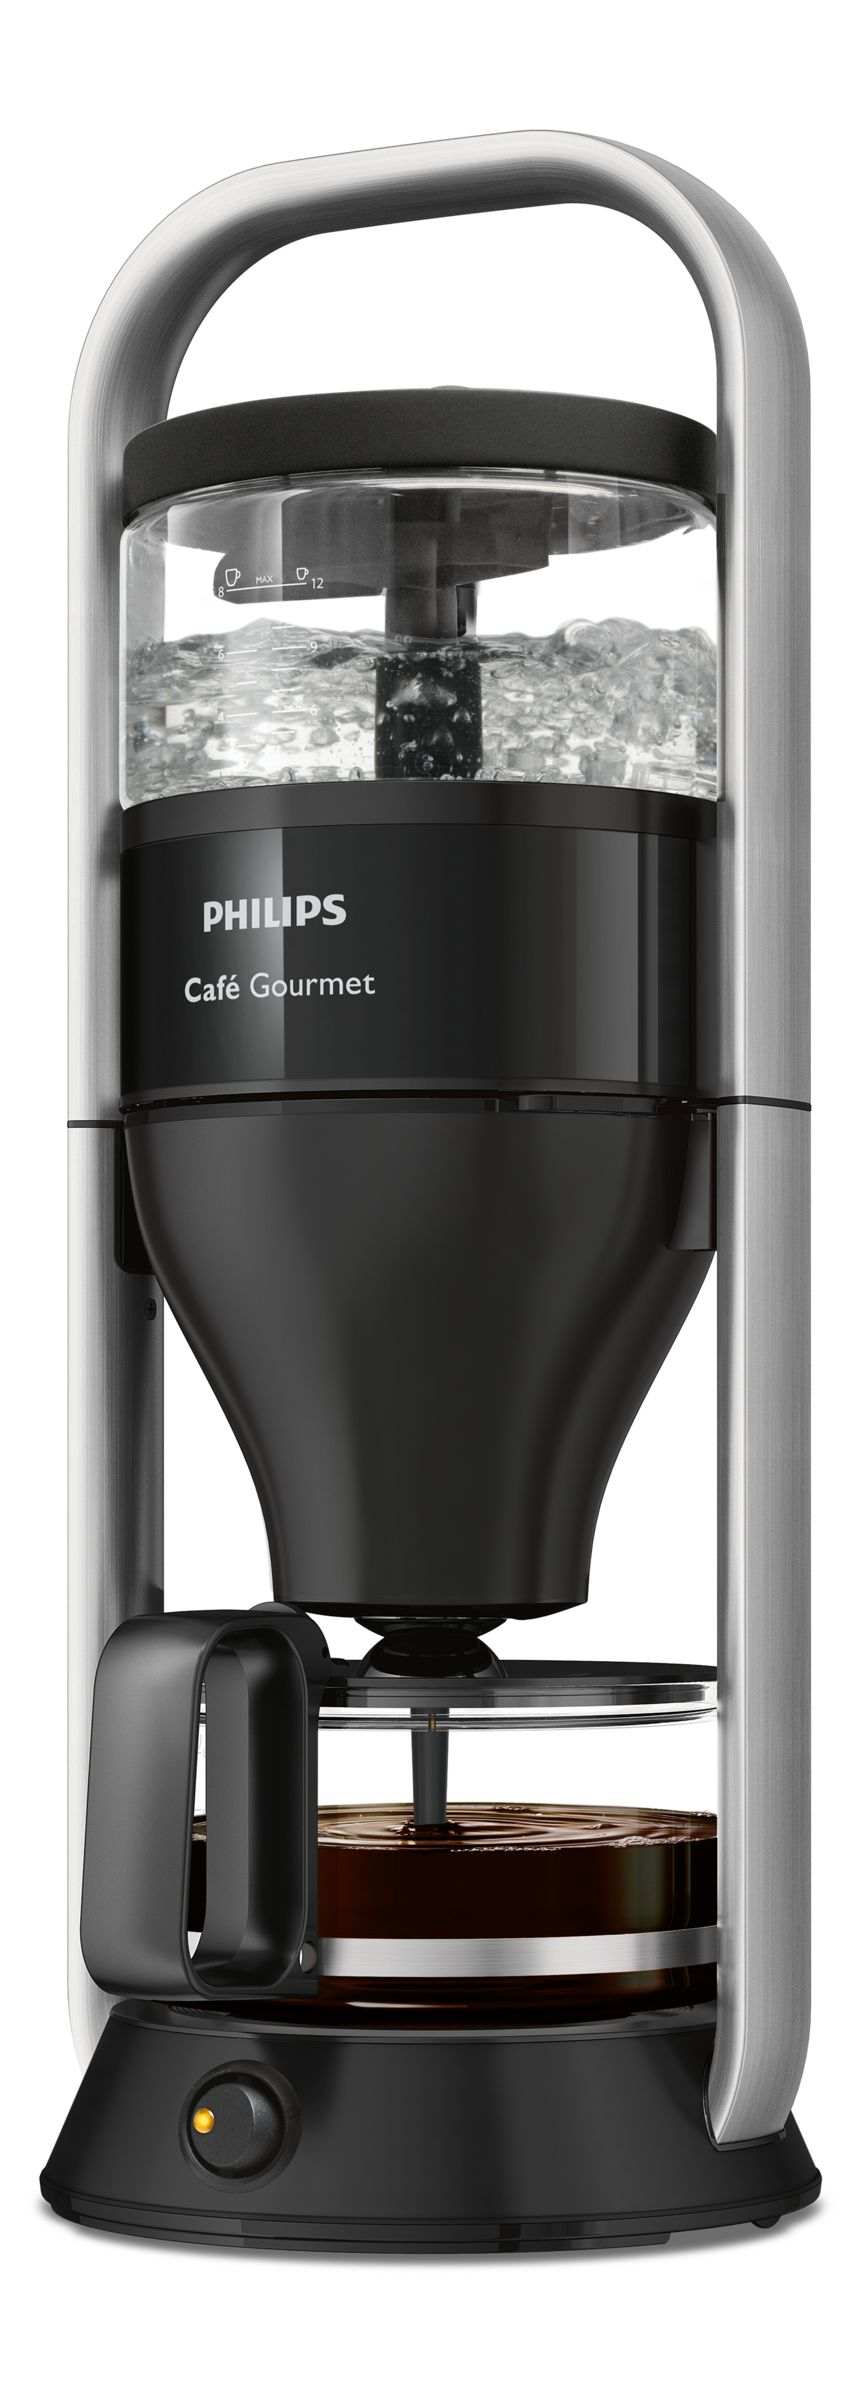 Philips Café Gourmet HD5408/20R1 coffee maker